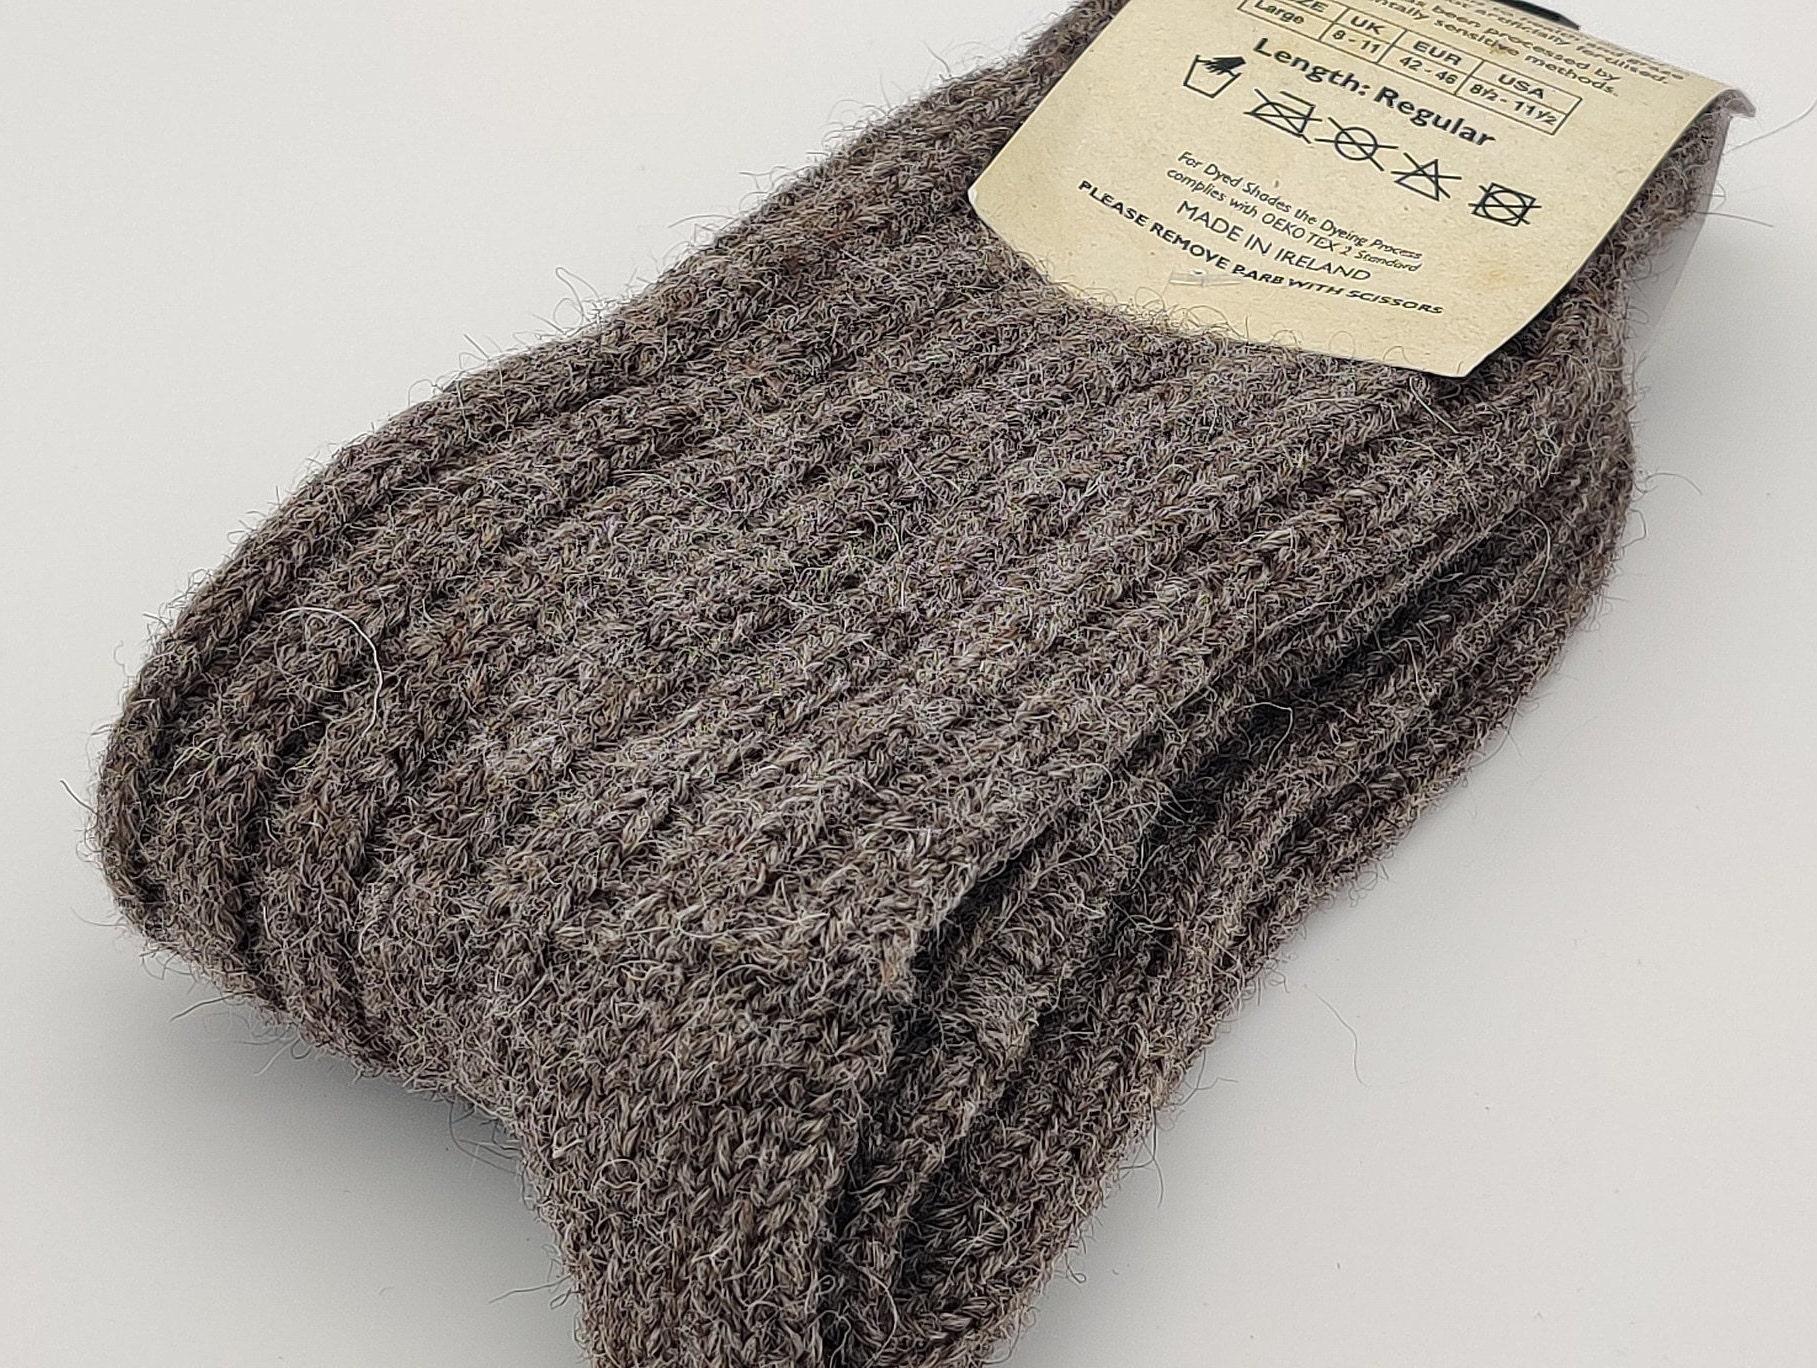 champion spot vase Irish Thick Wool Socks - Snug Socks in 100% Pure New Wool From Irish Sheep  - Hiking Socks - Brown / Dark Jacob Undyed - MADE IN IRELAND